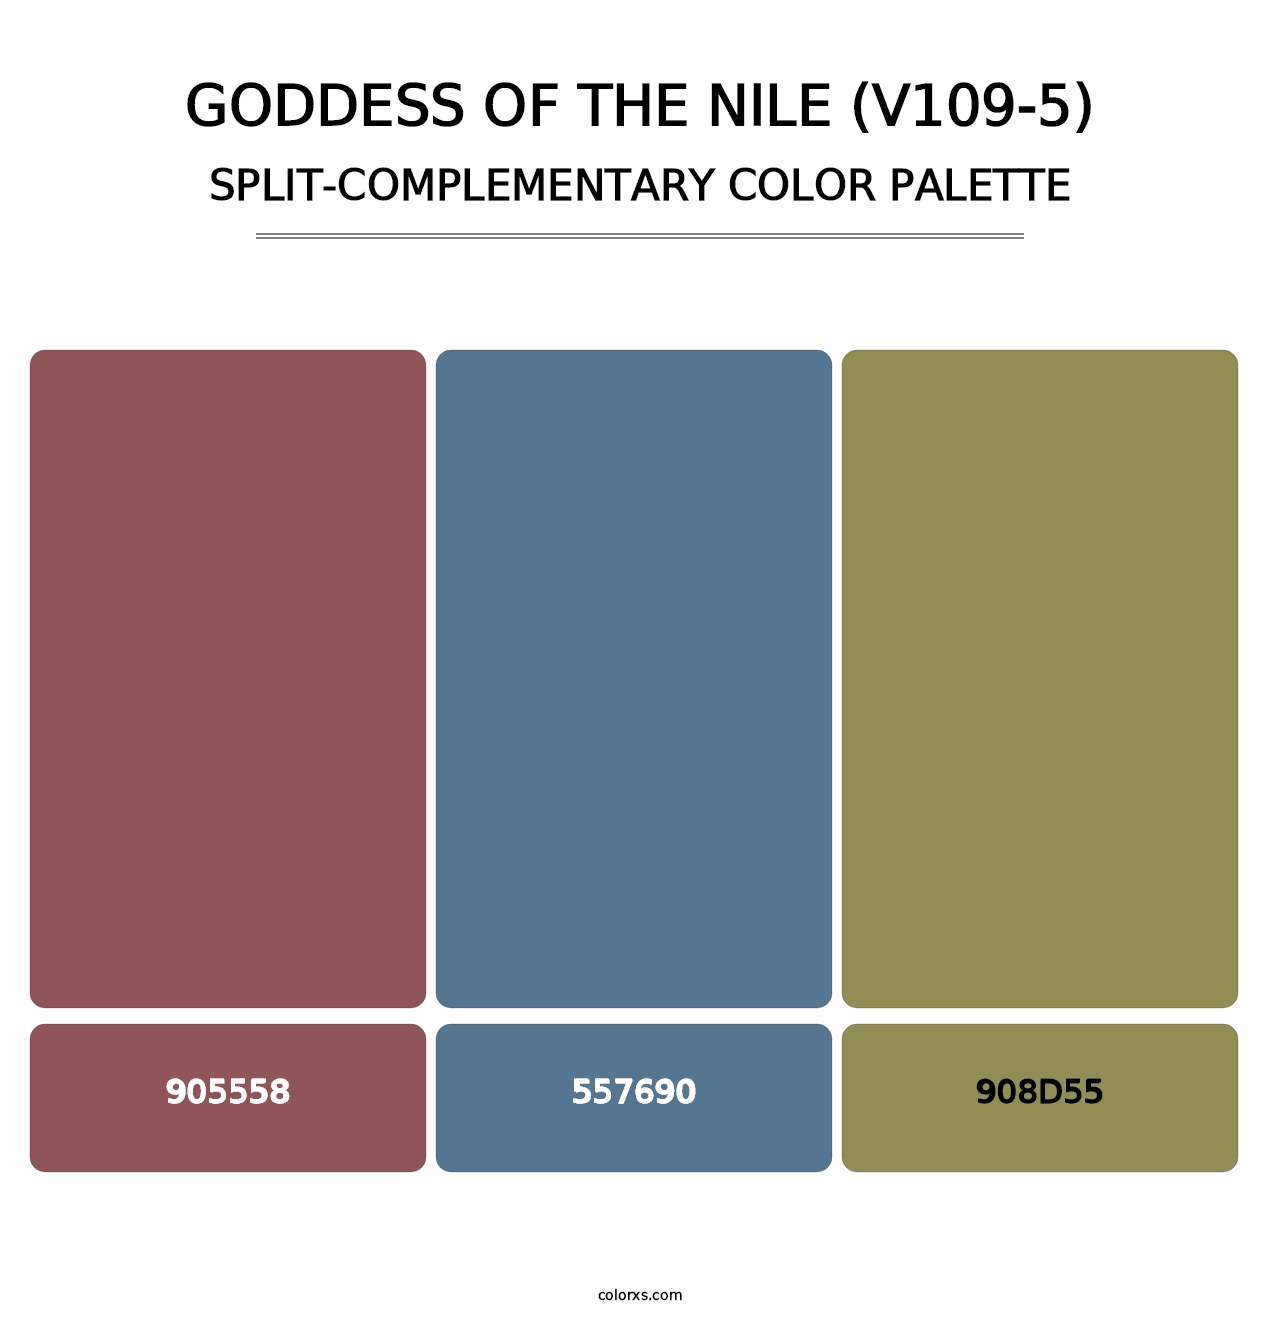 Goddess of the Nile (V109-5) - Split-Complementary Color Palette